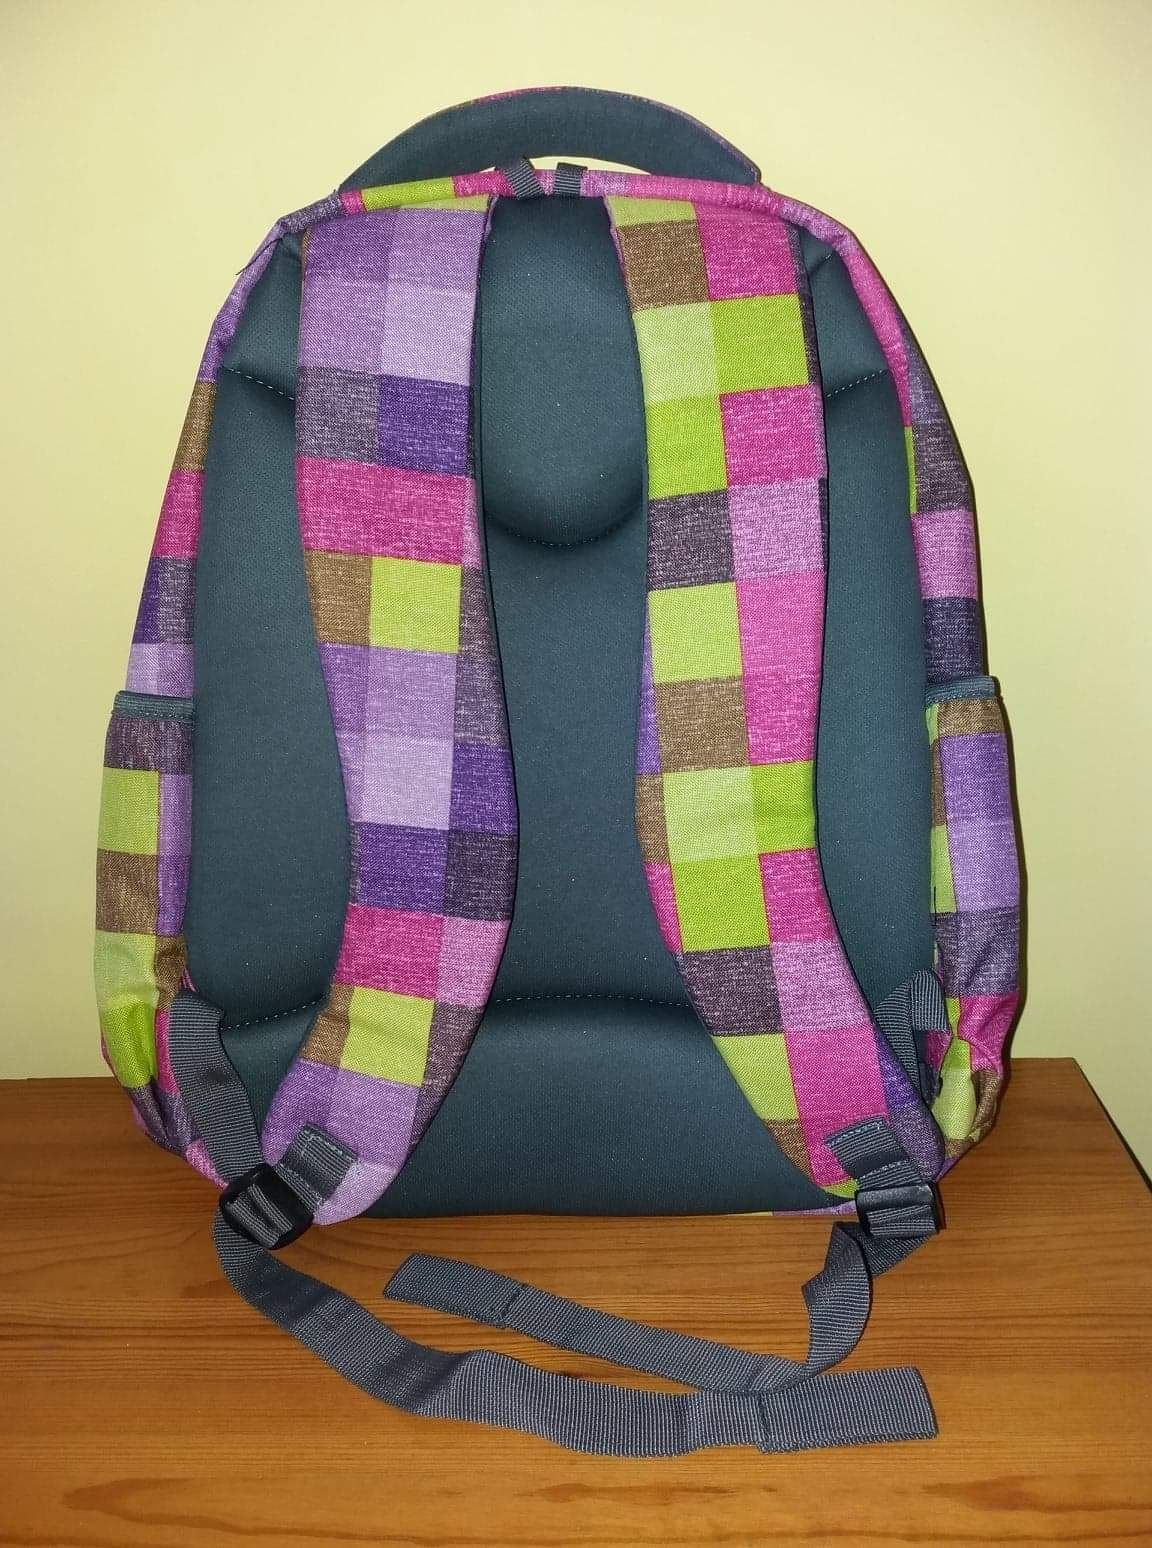 Plecak szkolny Coolpack - nowy bez metki